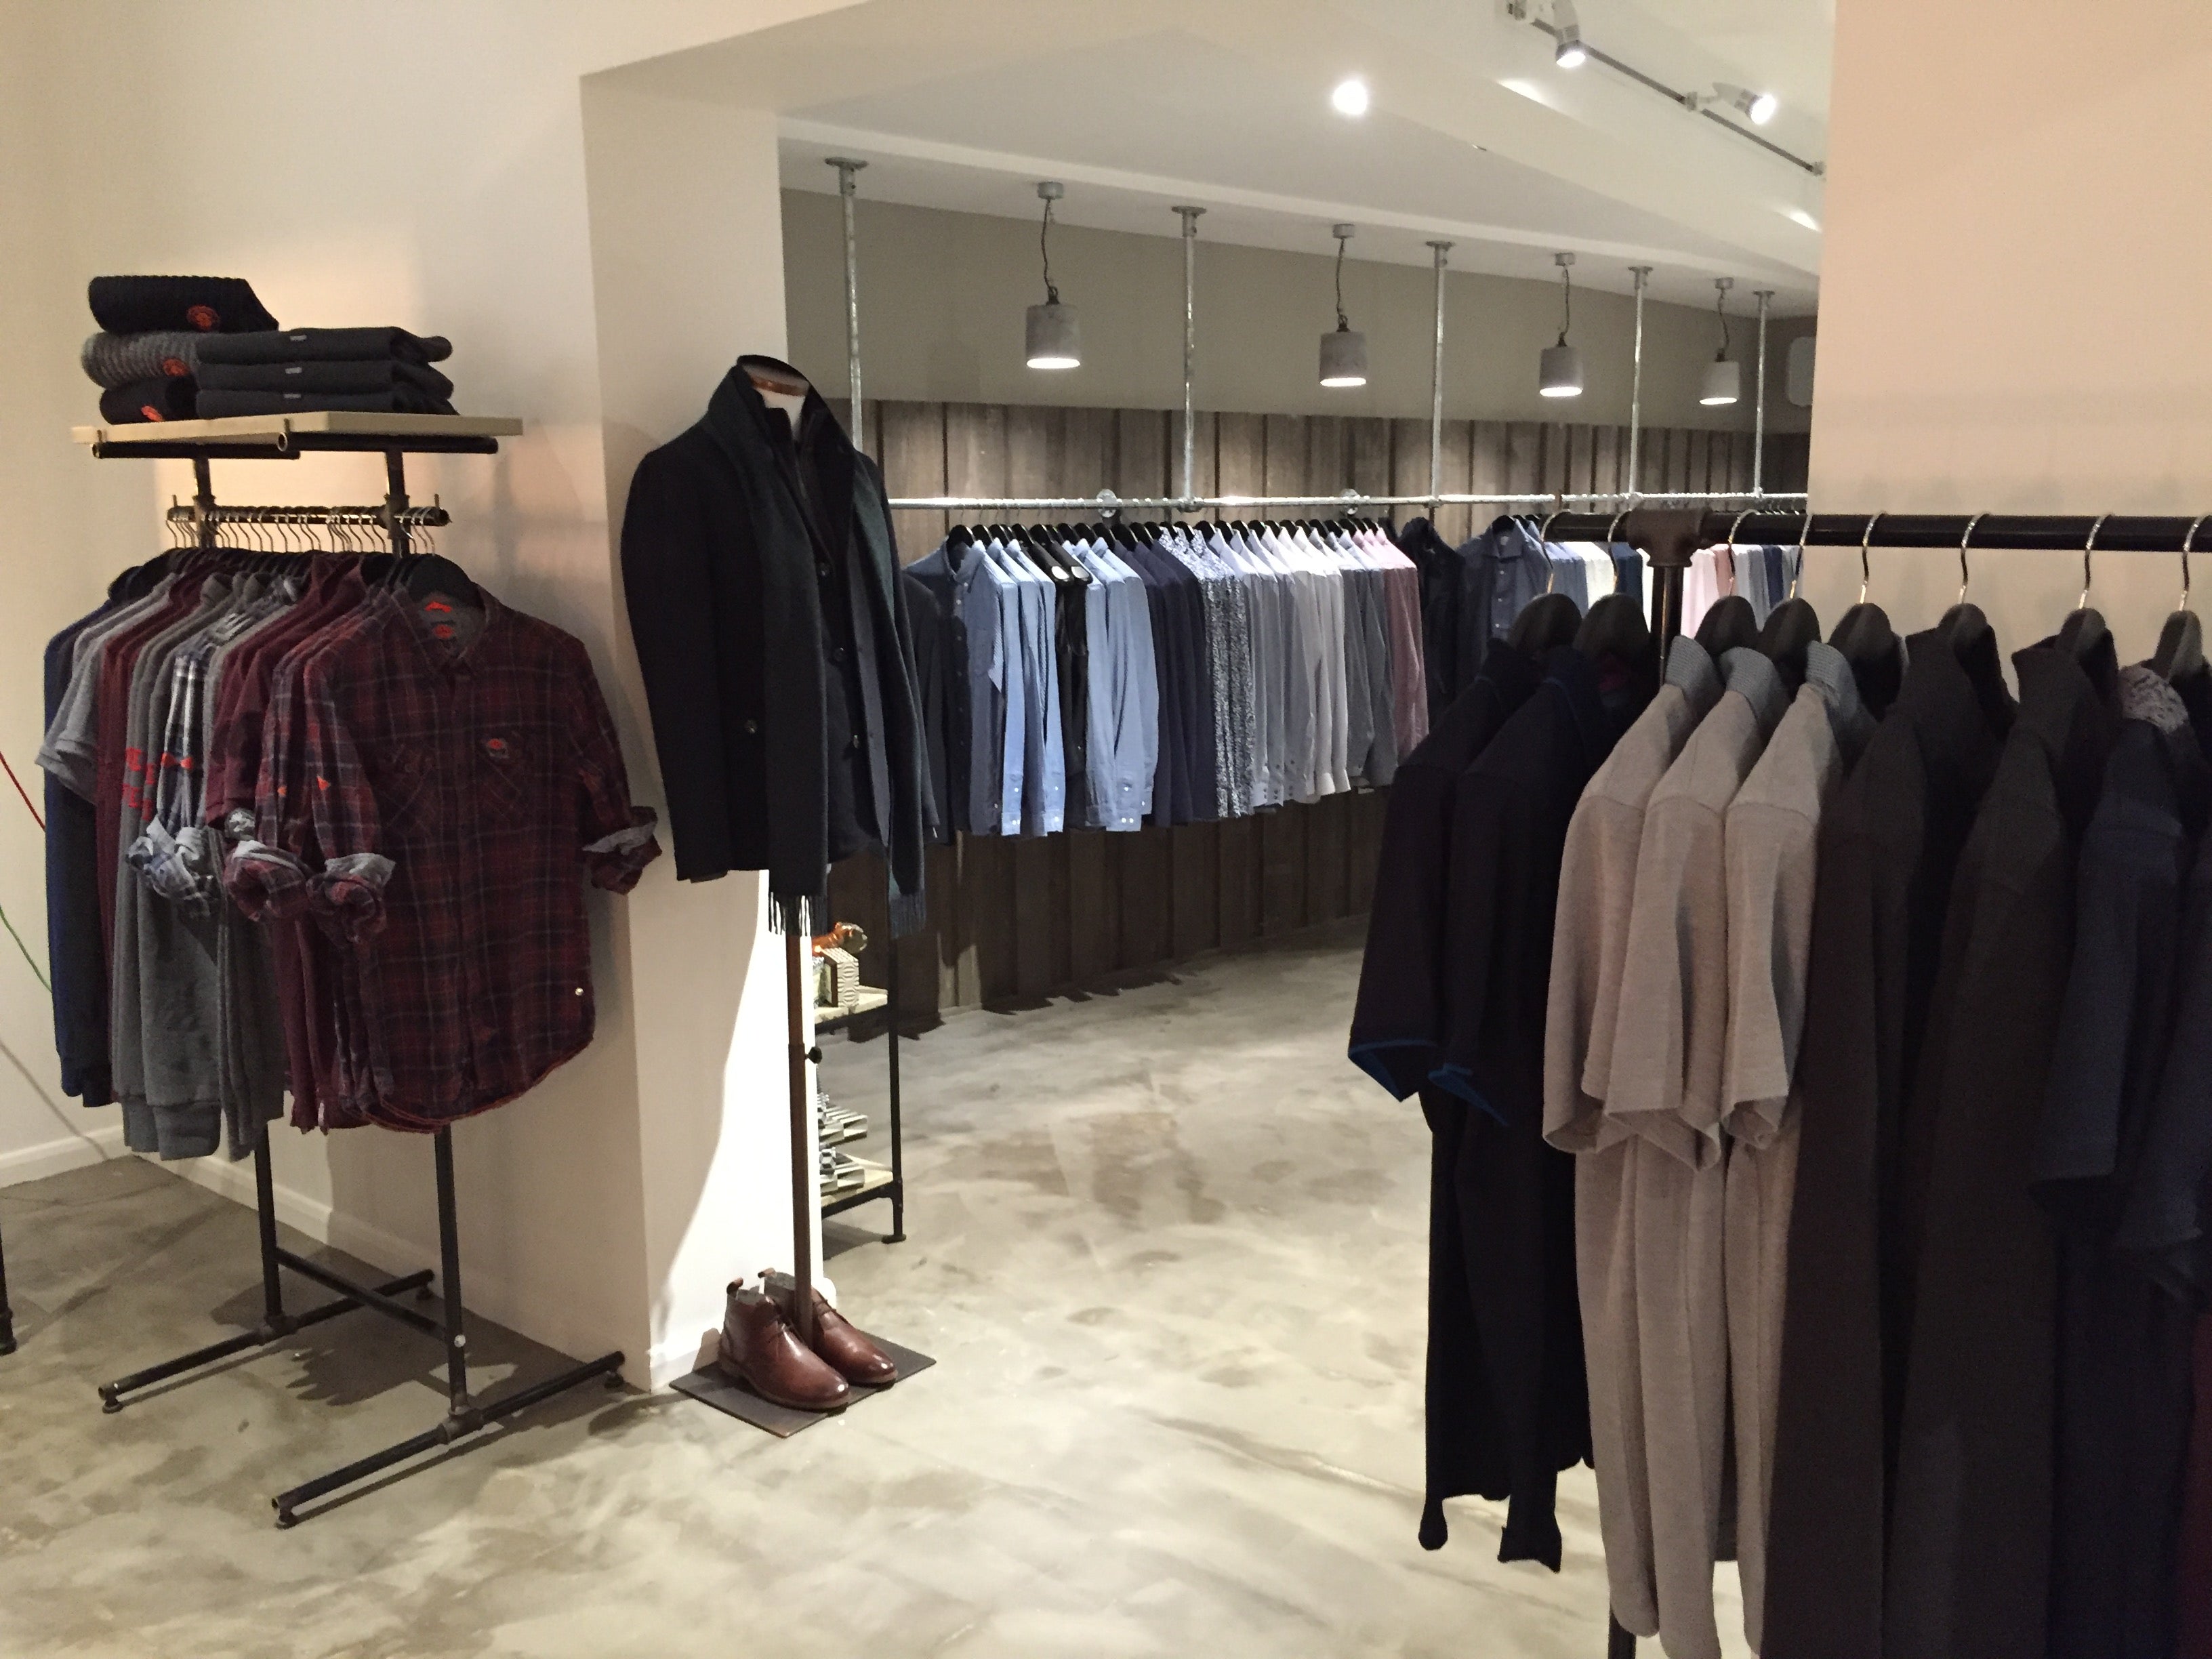 Javelin, sudbury, menswear fashion, customer space, retail interior design, industrial look